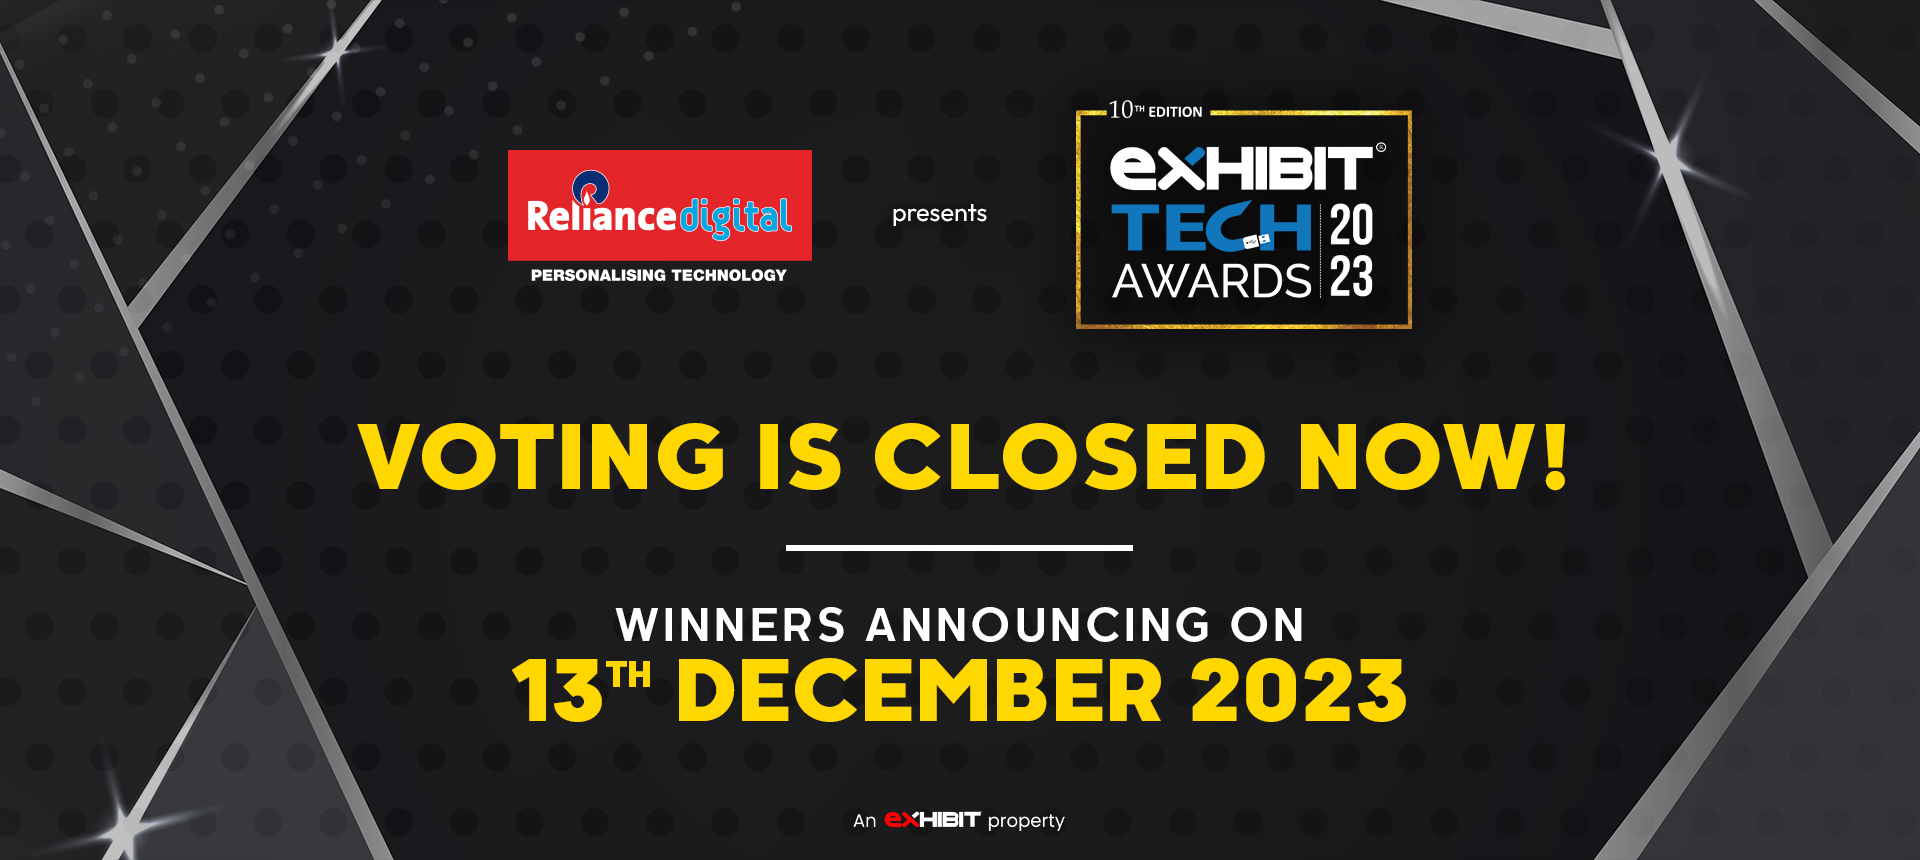 Exhibit Tech Awards 2023 - Voting lines closed